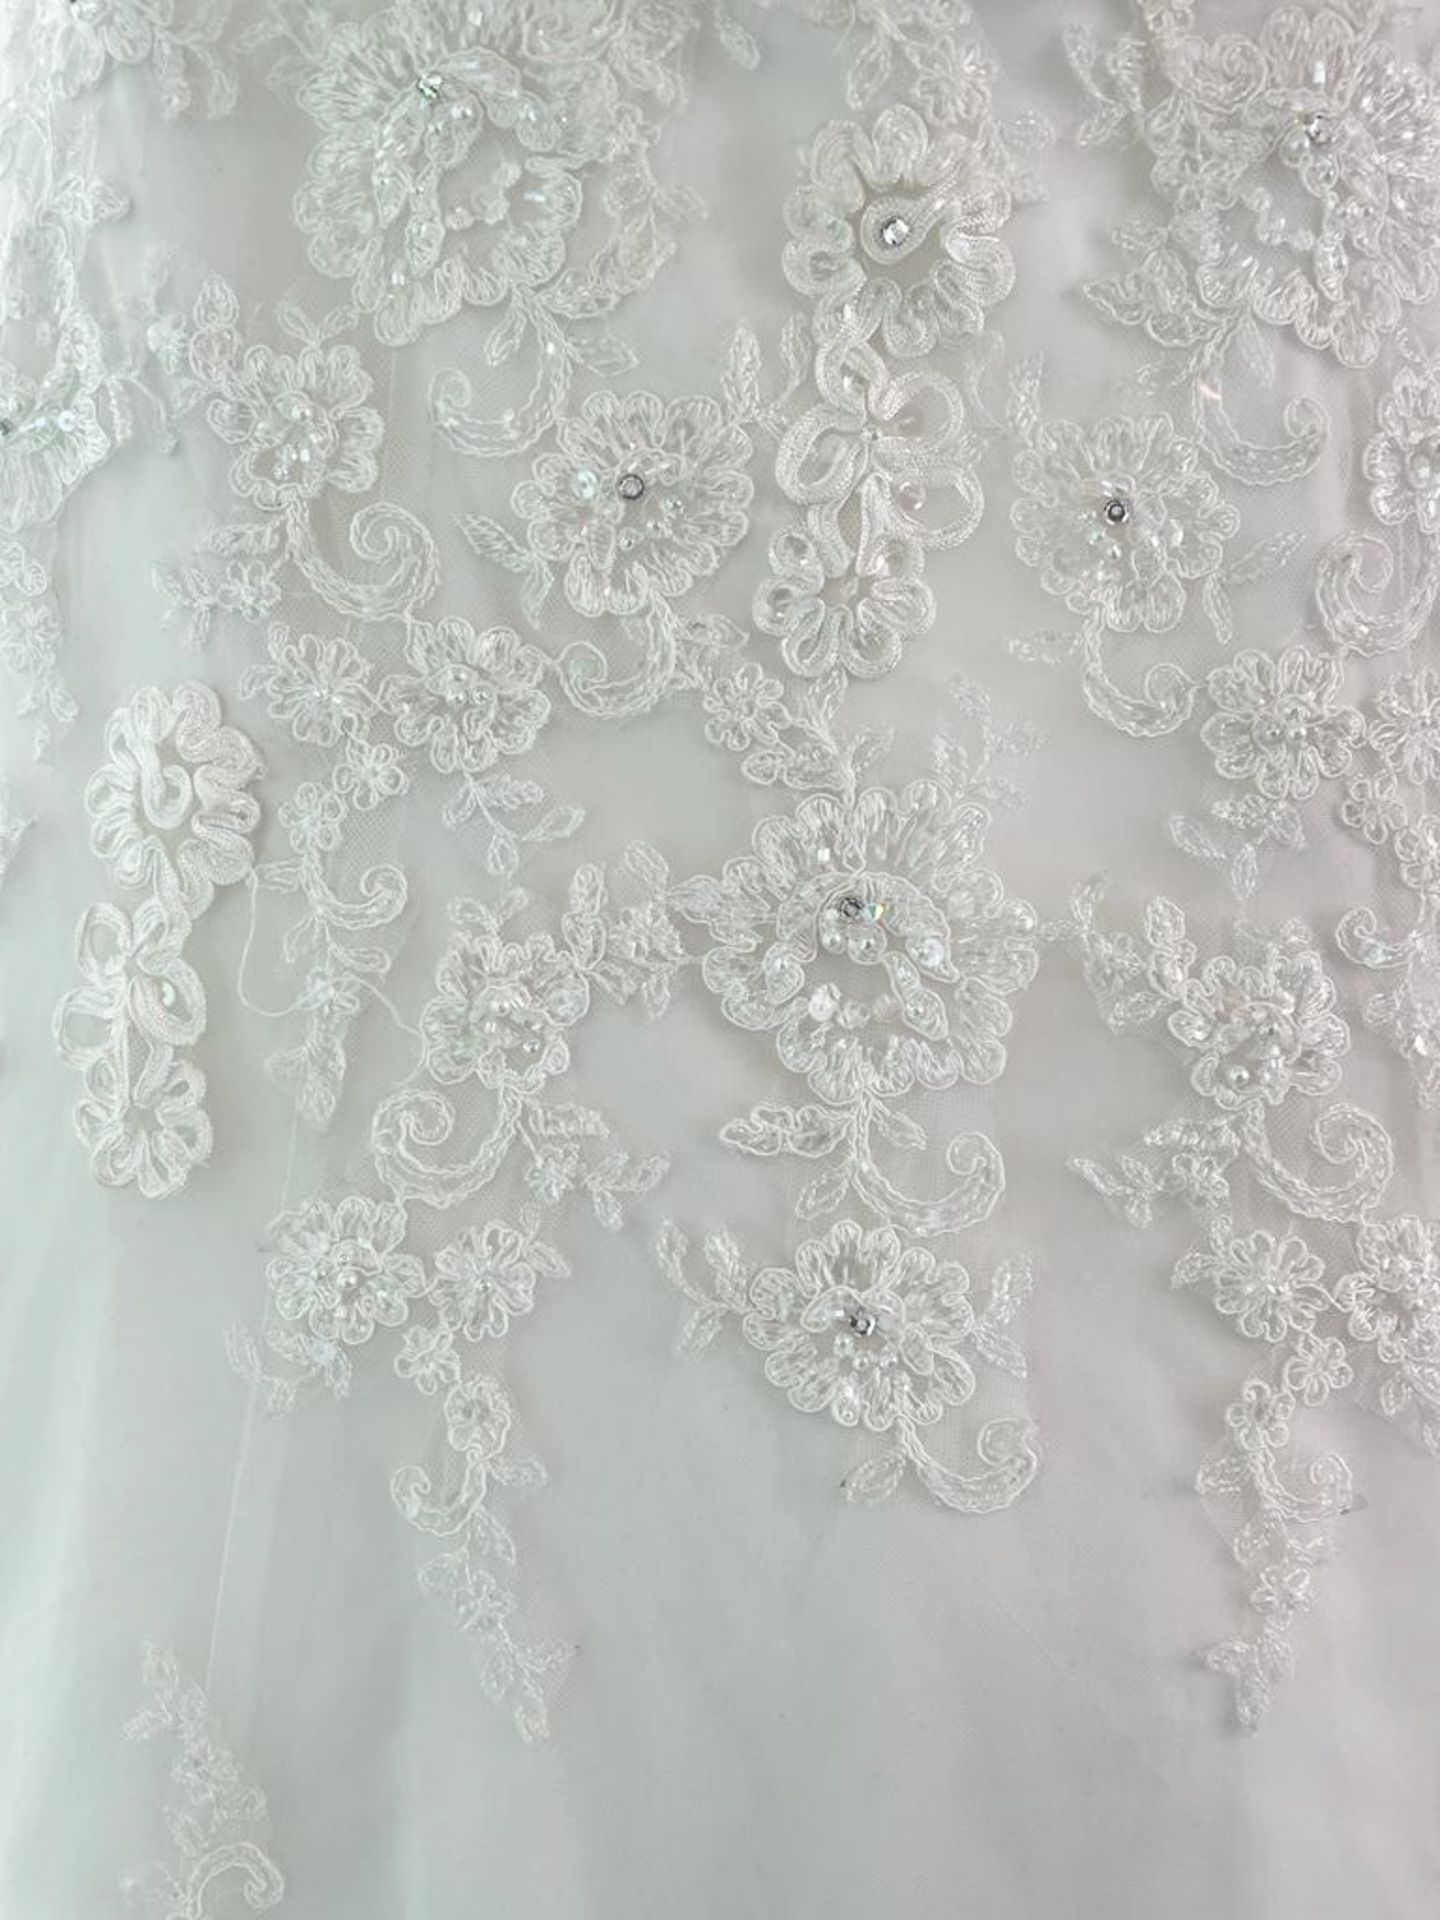 1 x ATELIER LYANNA Designer Wedding Dress Bridal Gown - Size: UK 12 - Original RRP £1,600 - Image 4 of 14